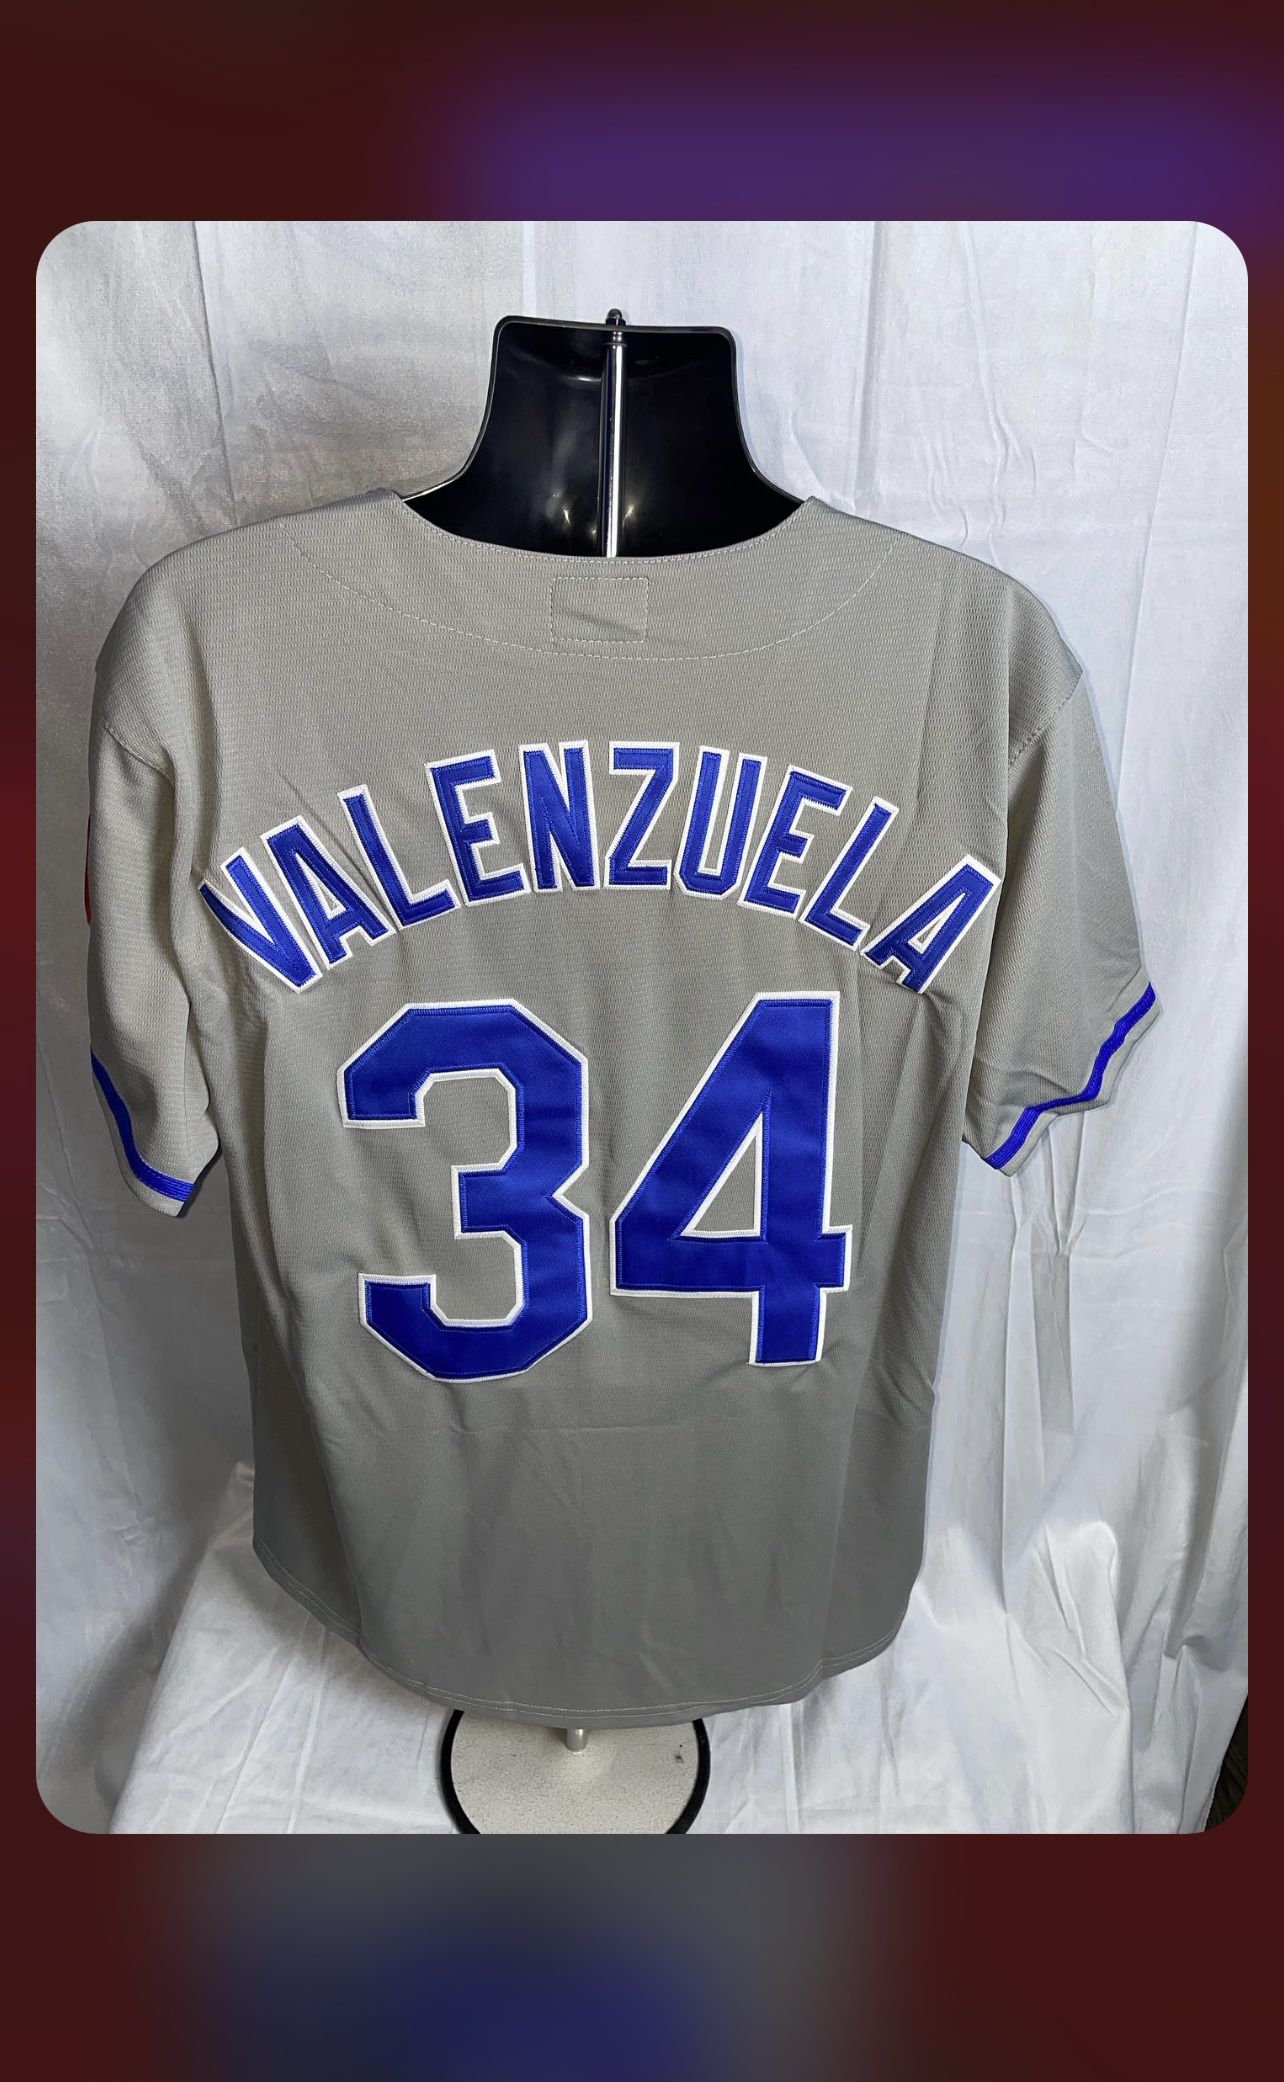 Dodgers Valenzuela Jersey for Sale in Lynwood, CA - OfferUp